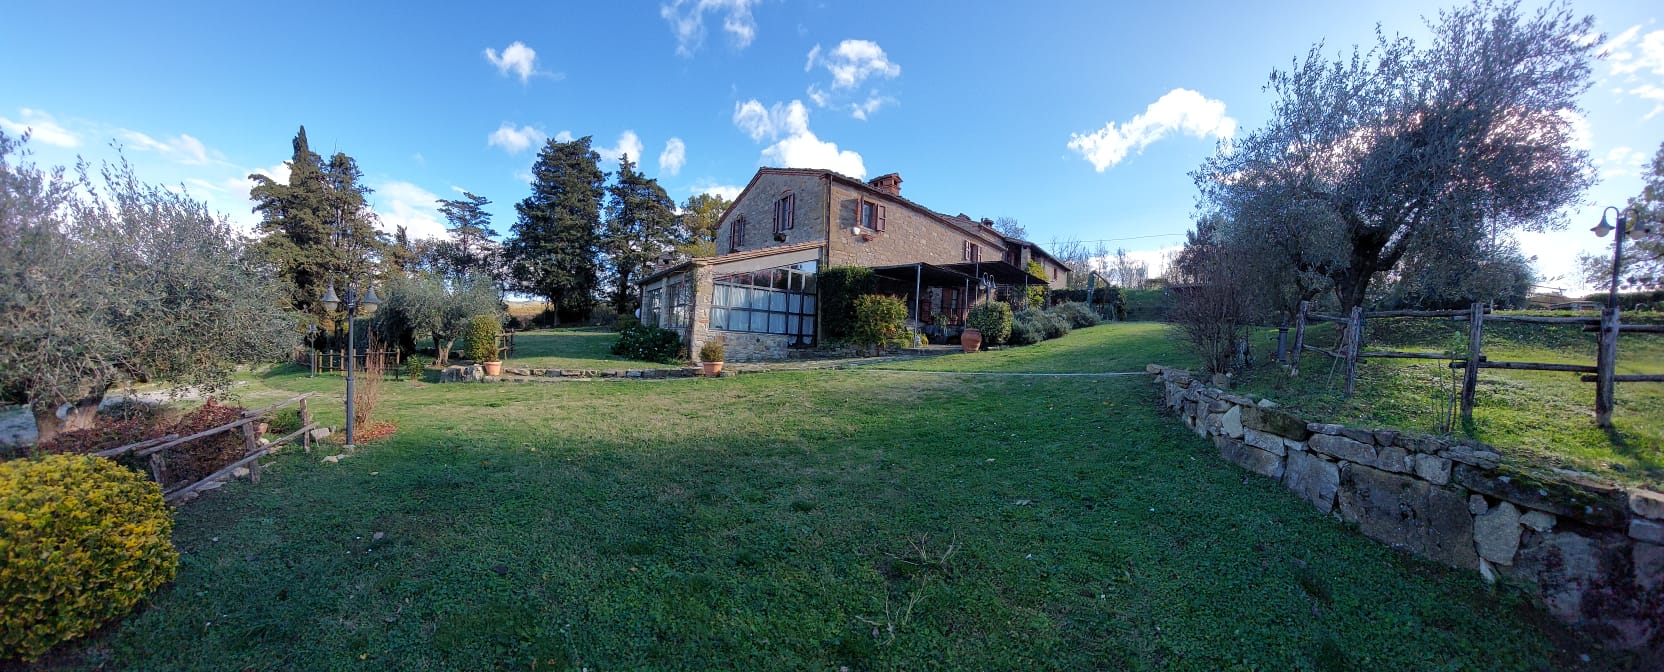 For sale cottage by the lake Passignano sul Trasimeno Umbria